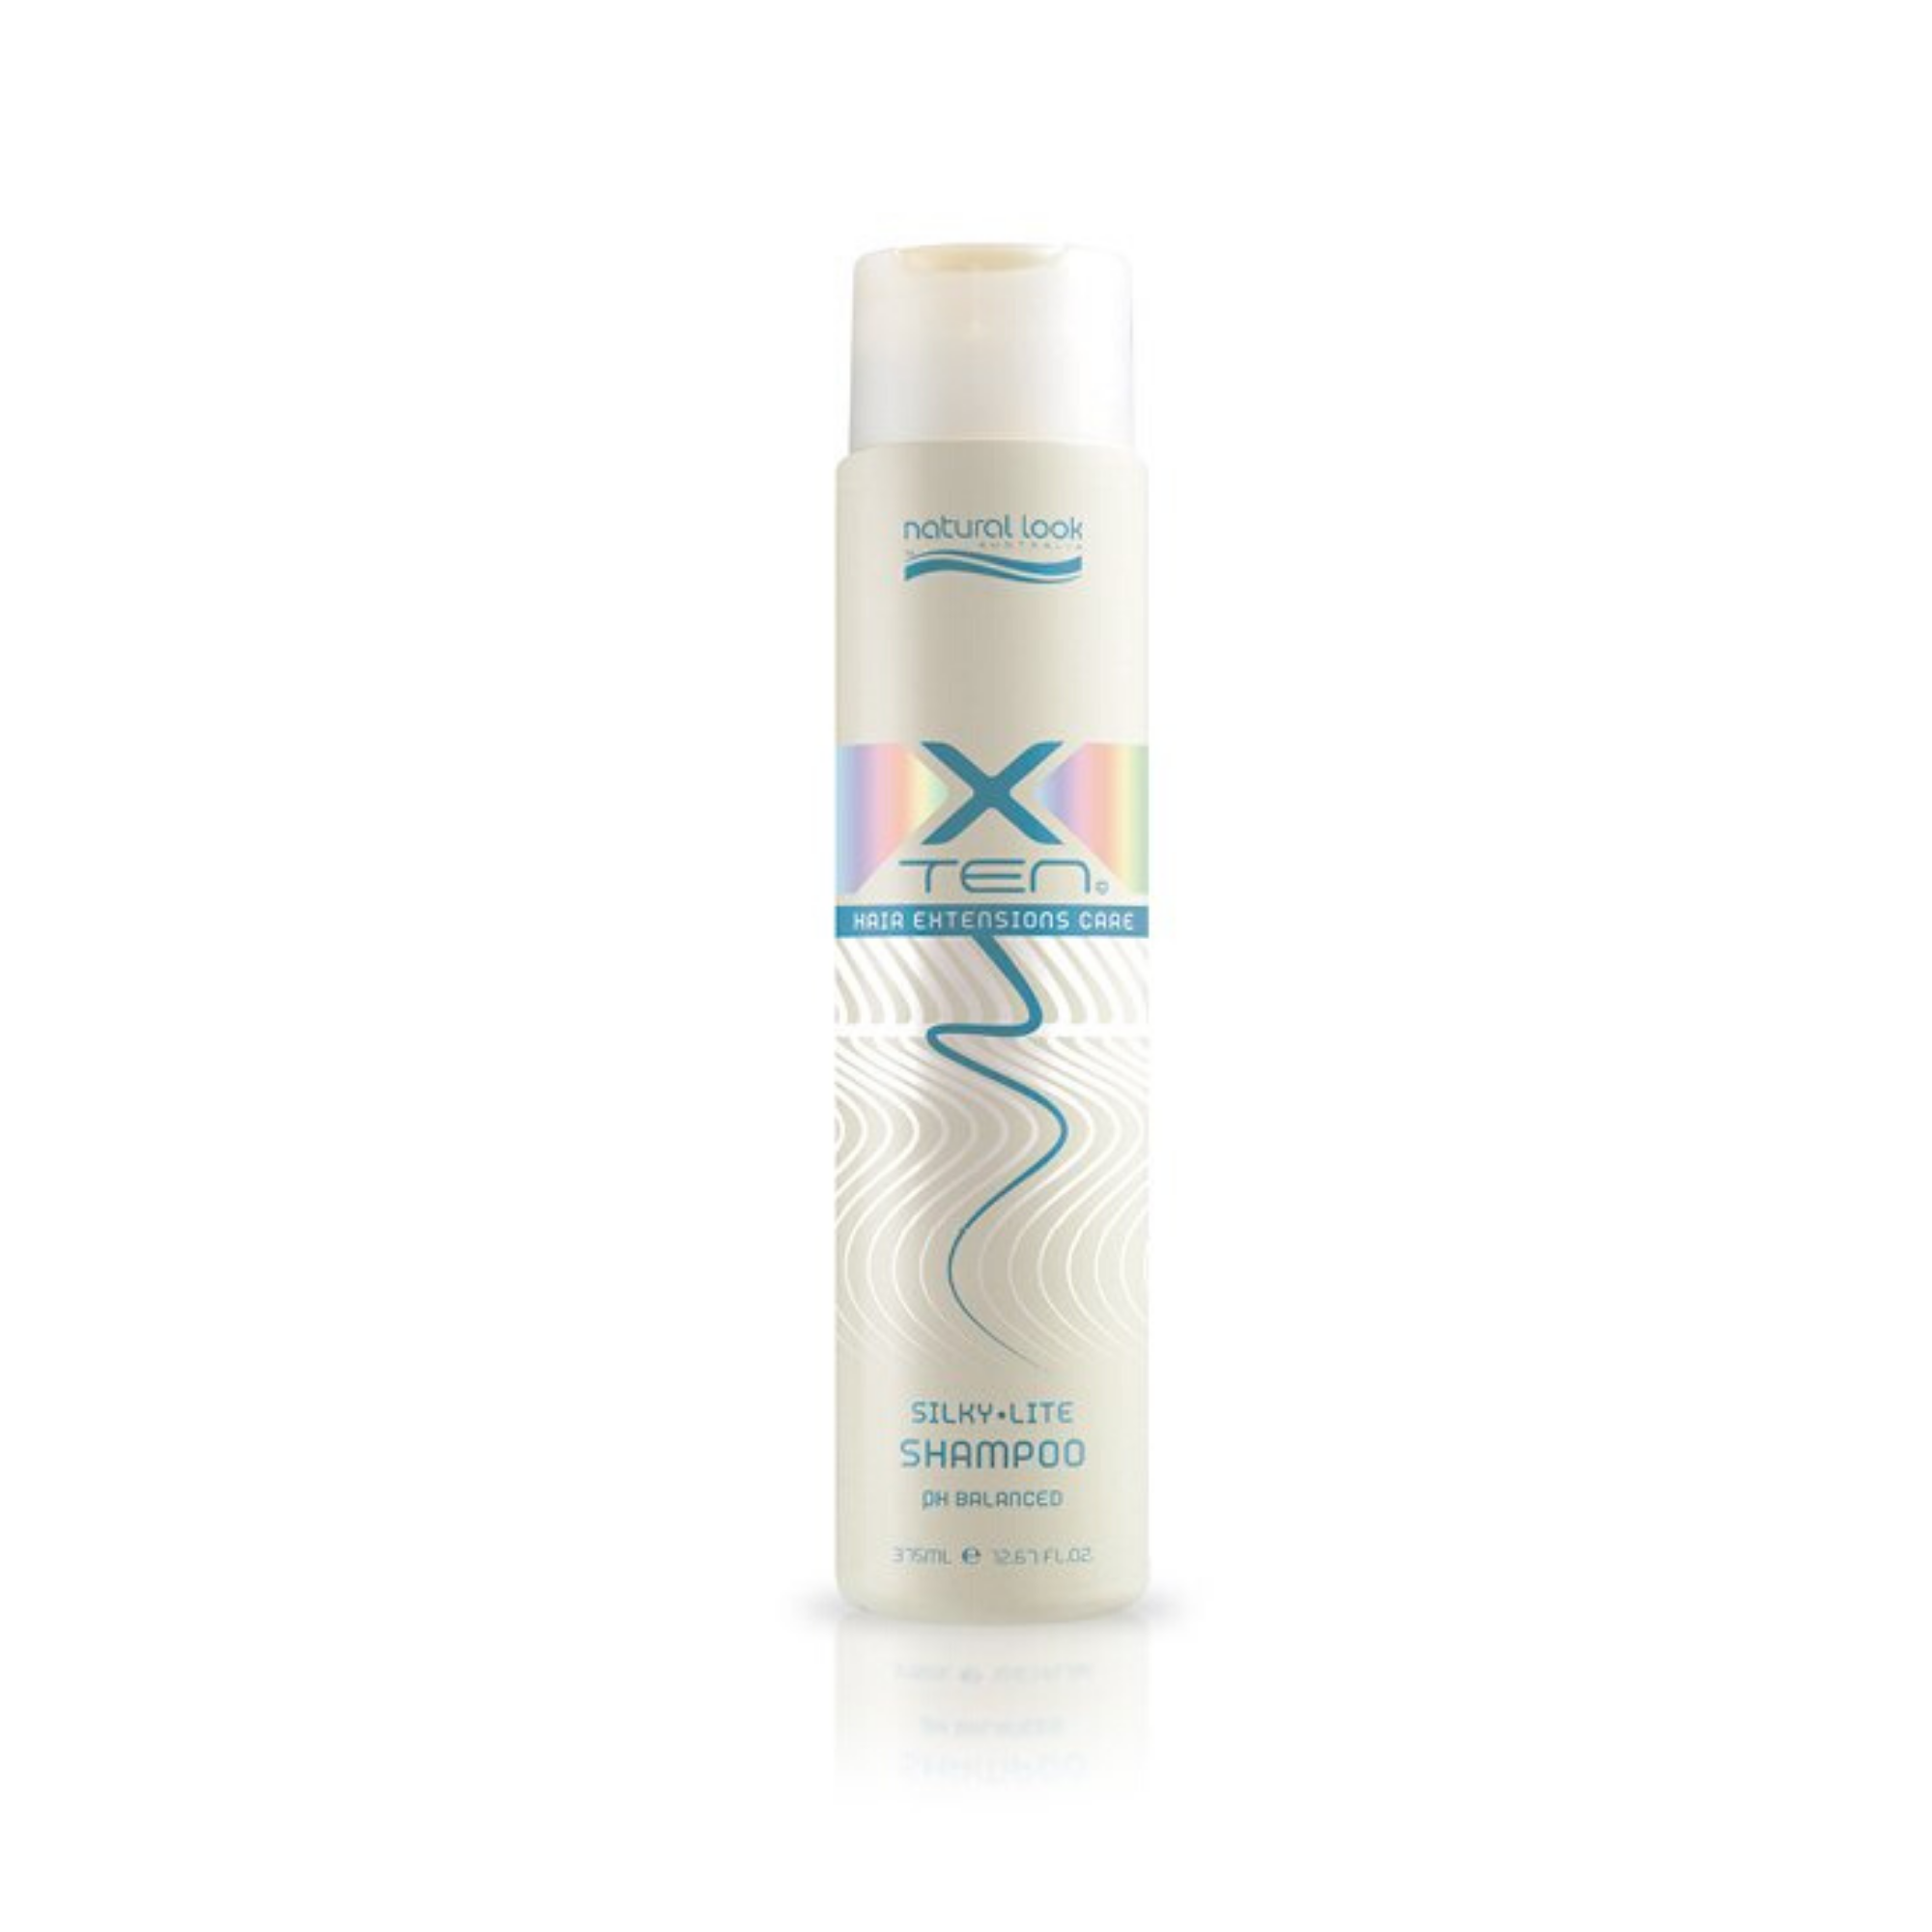 Natural Look X Ten Hair Extension Care Silky Lite Shampoo